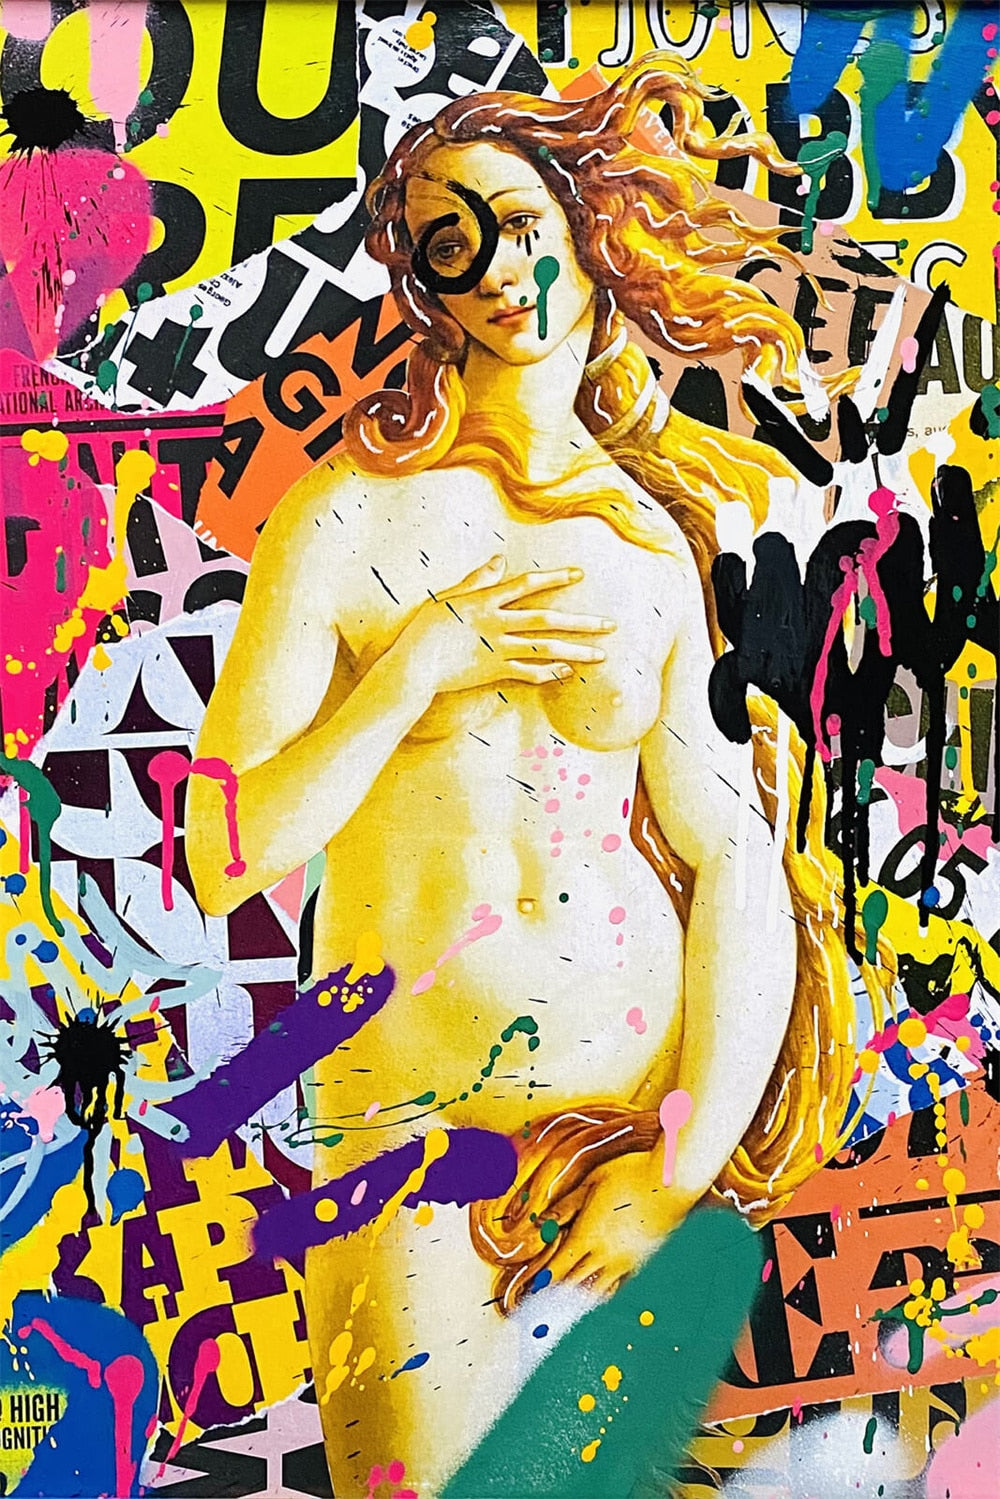 (4 Different Prints) Abstract Graffiti Poster Pop Street King David Print